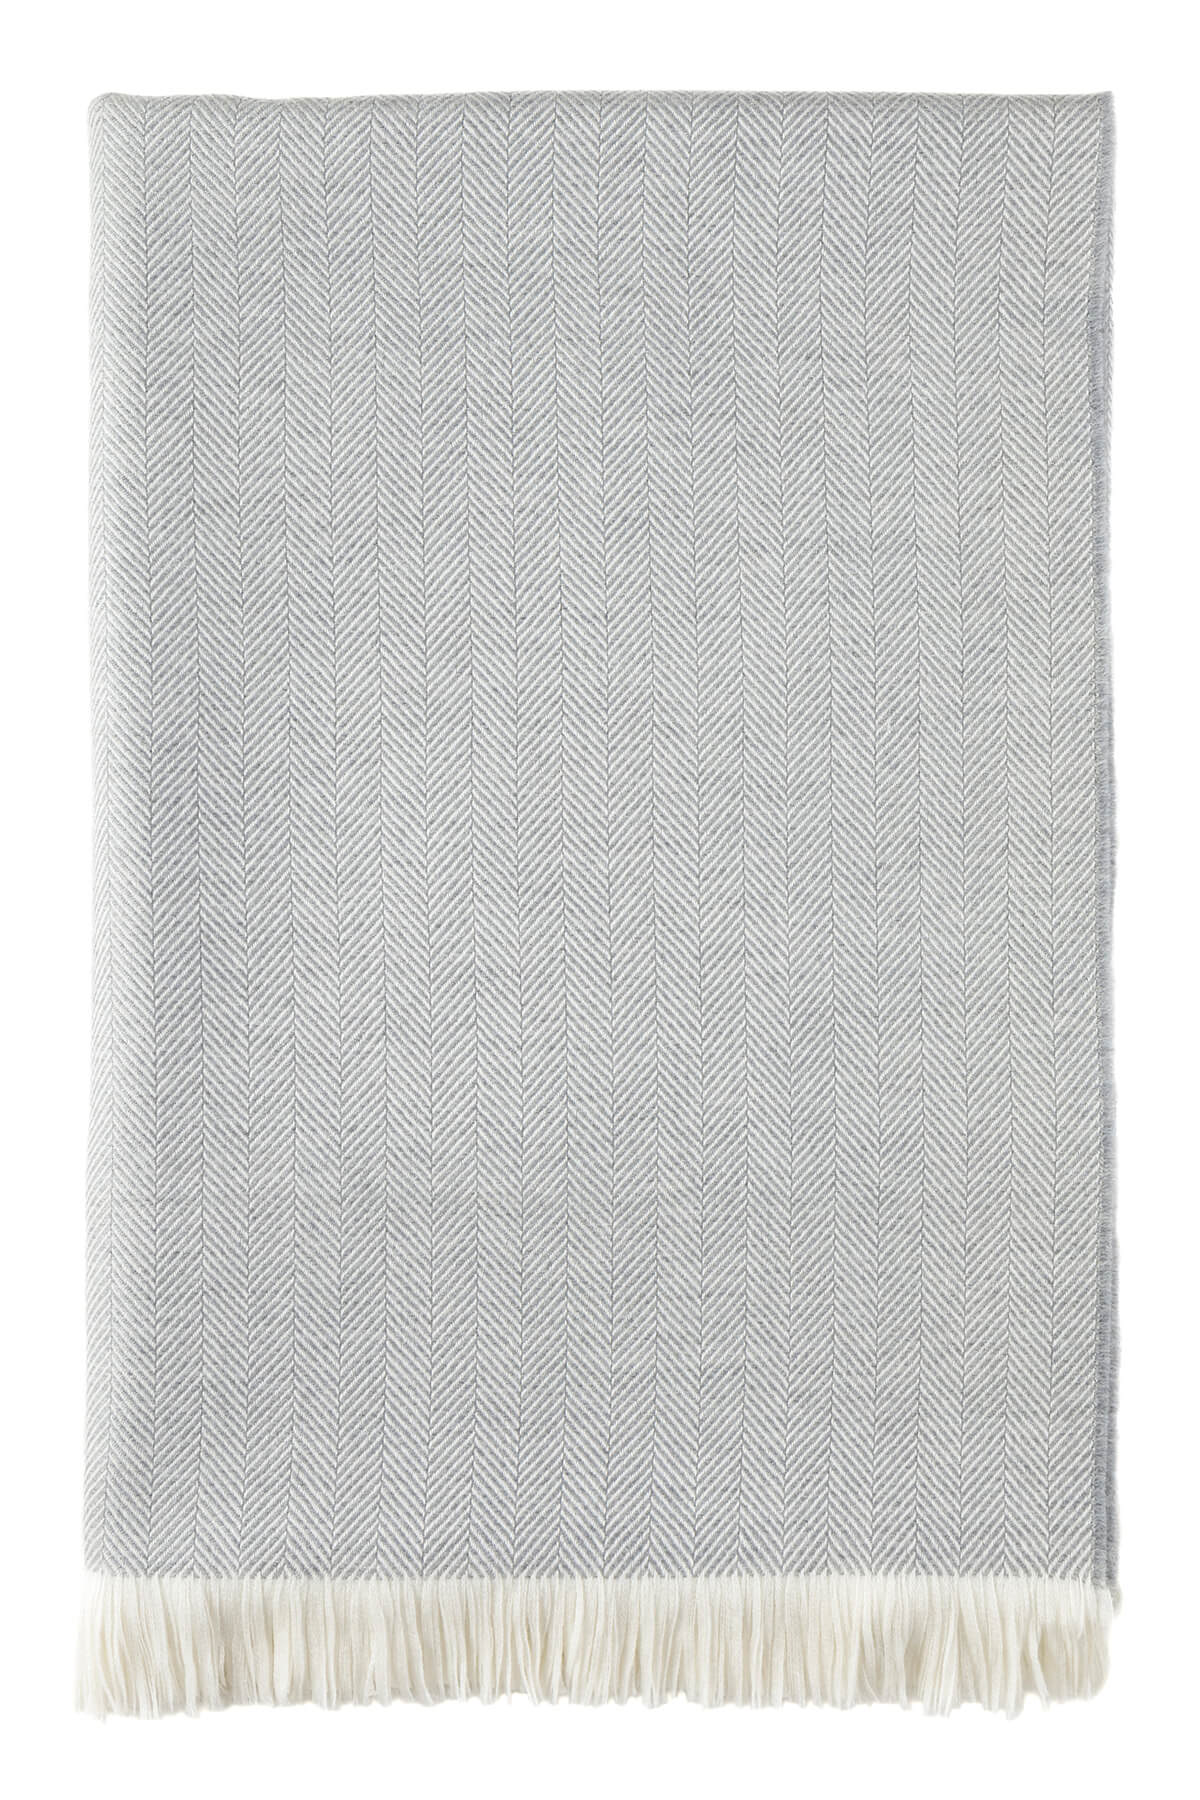 Johnstons of Elgin’s Herringbone Merino Bed Throw in Silver Birch & White on white background WD001115RU5857ONE